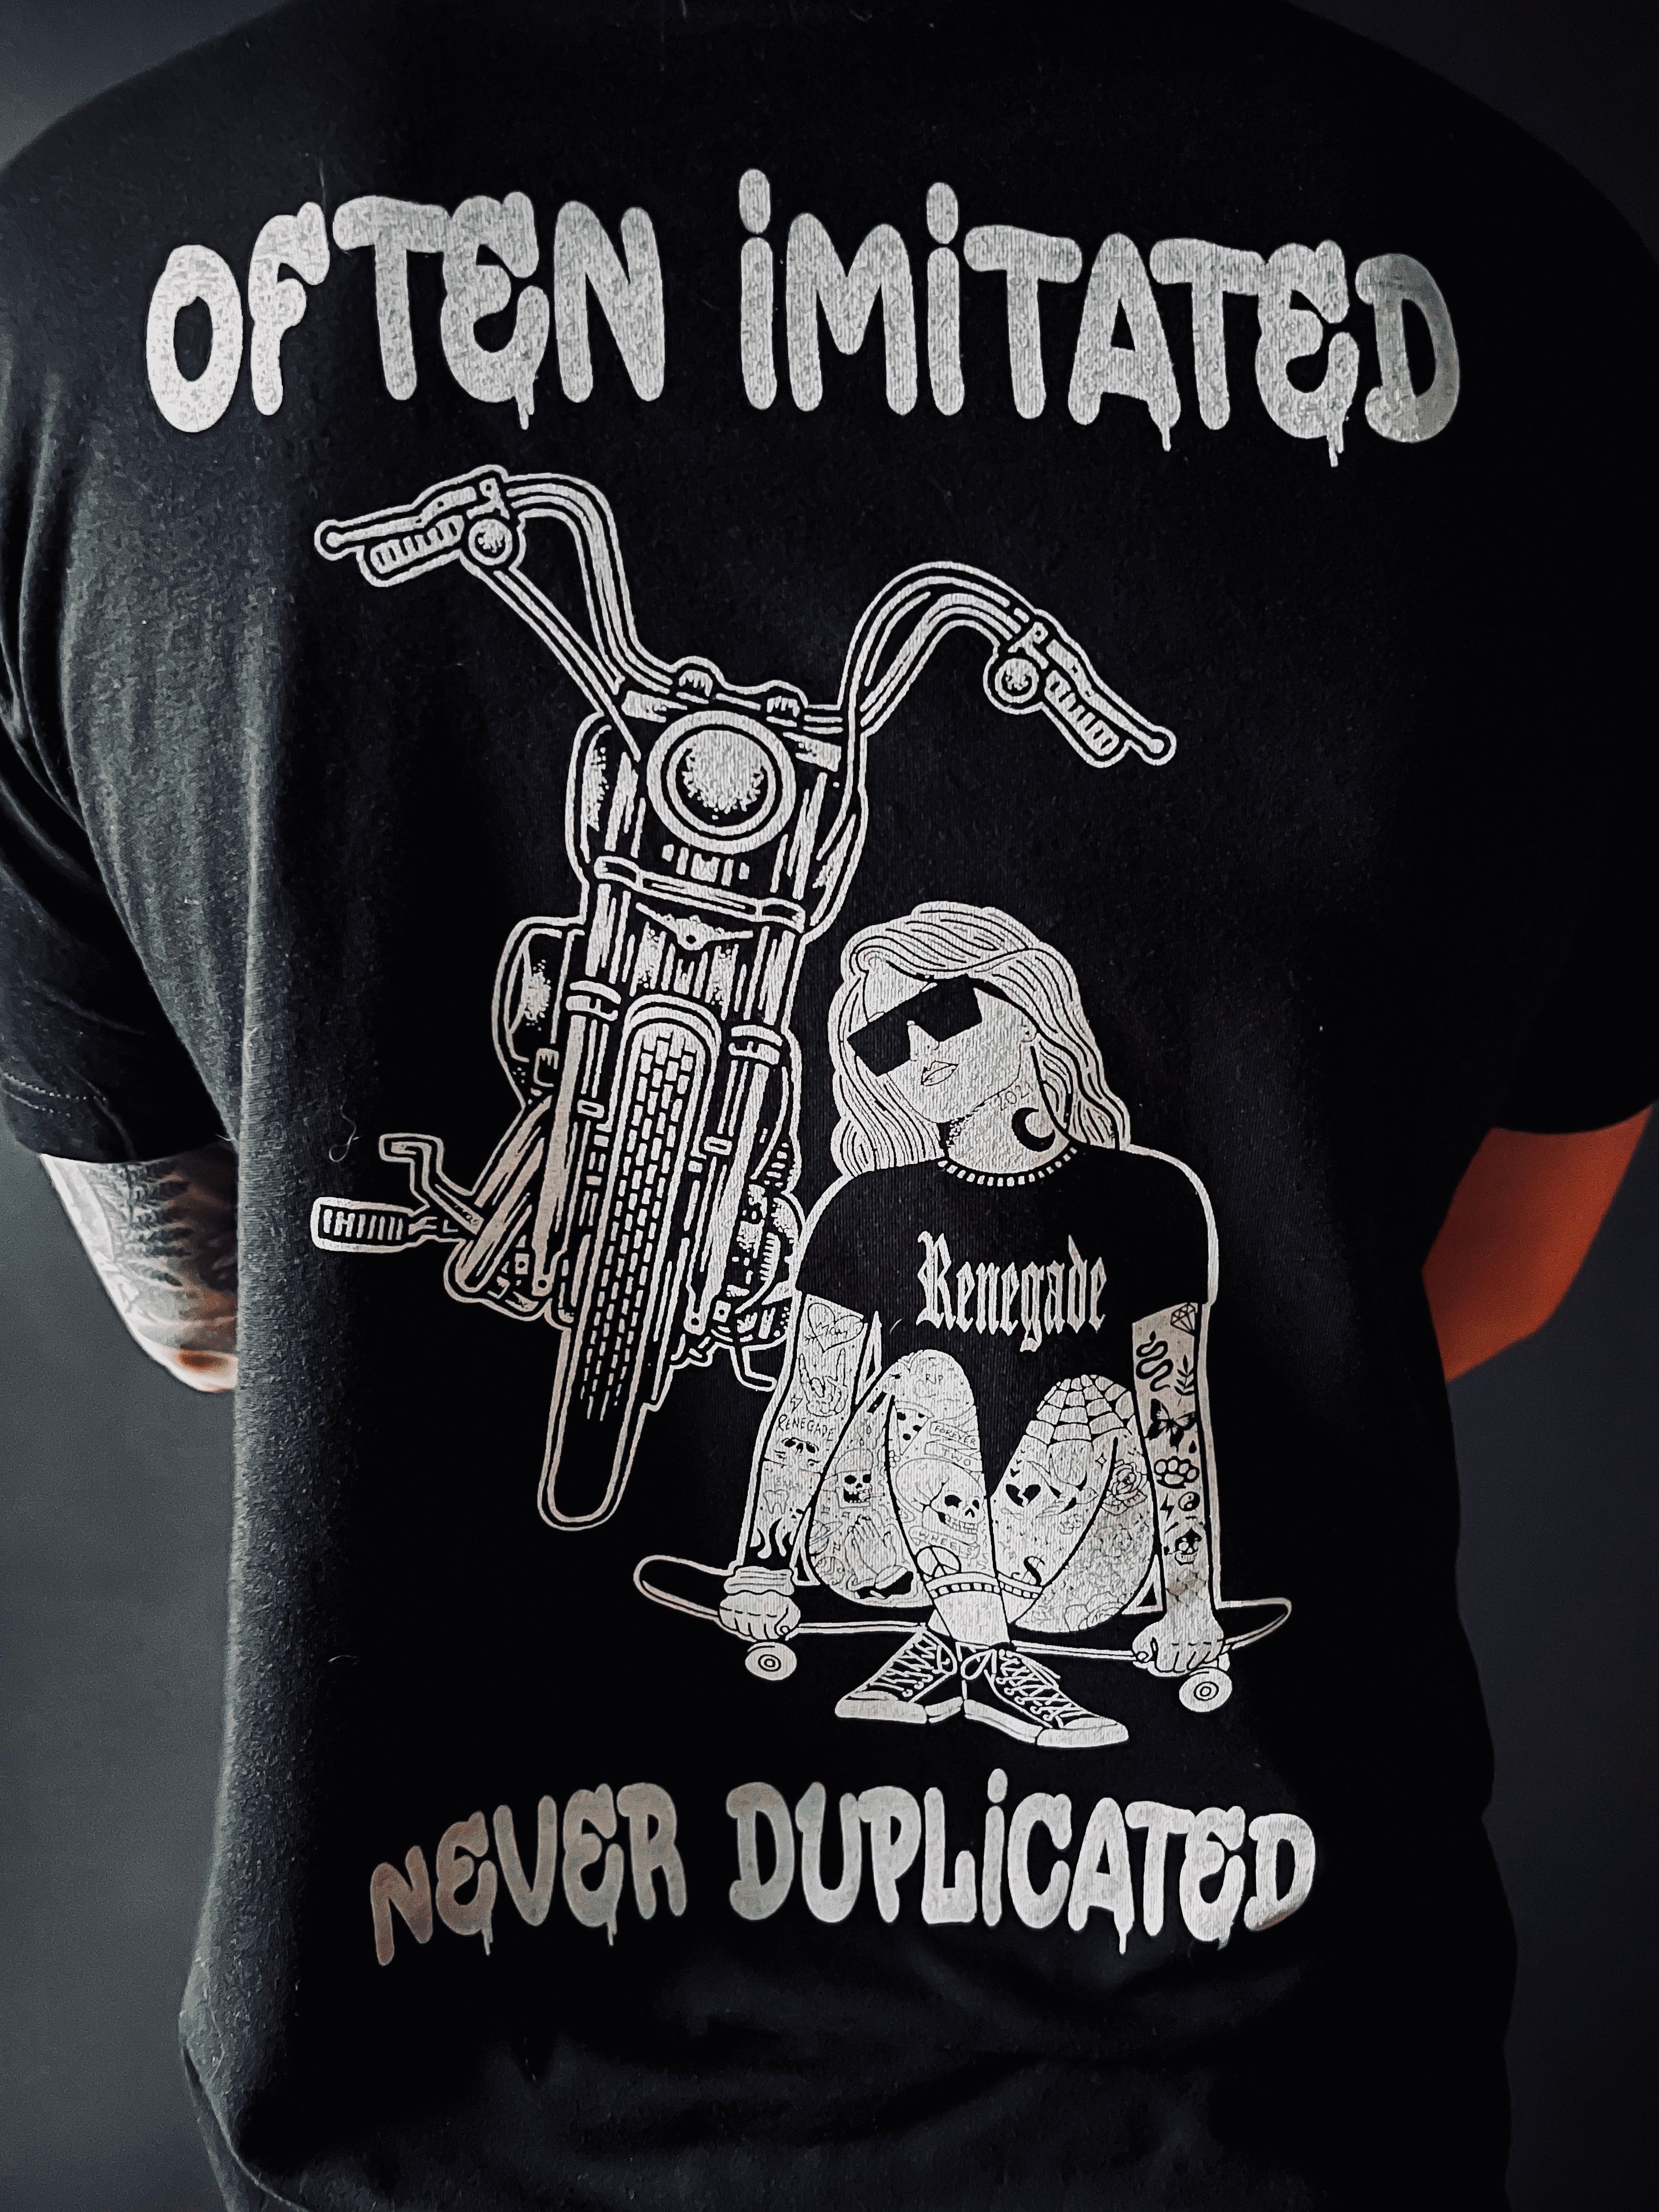 Often Imitated T-Shirt